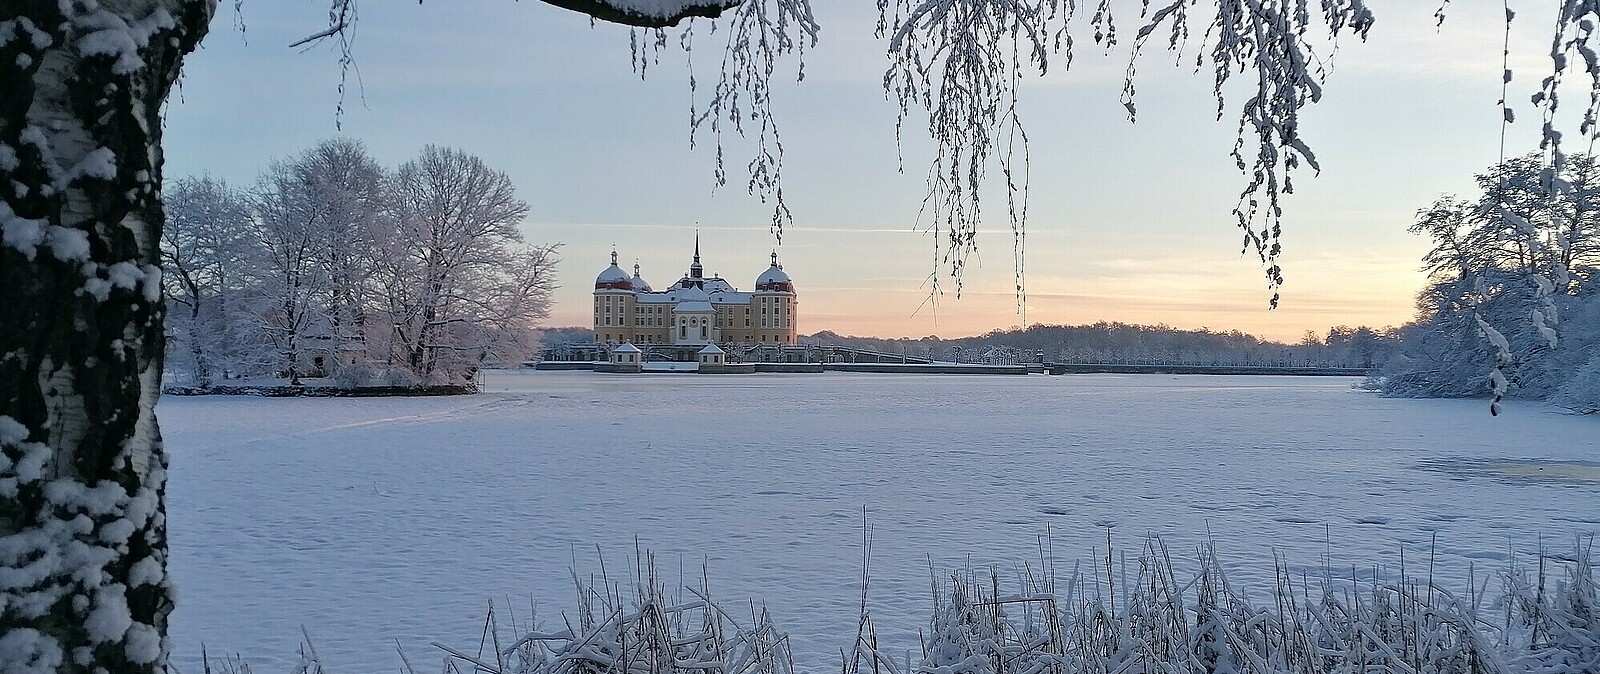 Das Barockschloss Moritzburg sieht besonders im Winter besonders zauebrhaft aus.